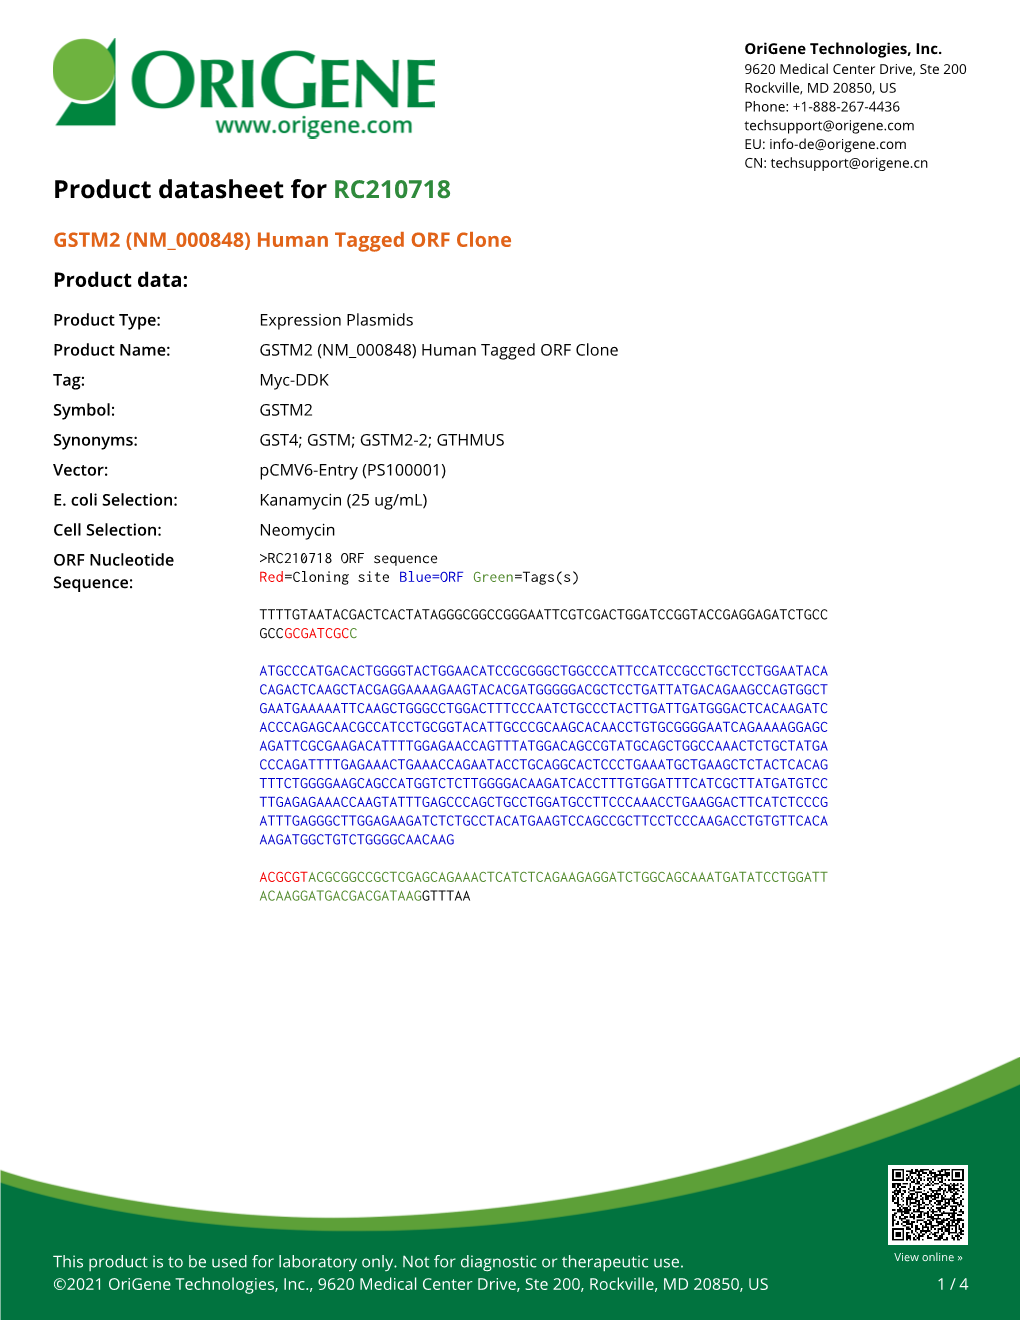 GSTM2 (NM 000848) Human Tagged ORF Clone – RC210718 | Origene